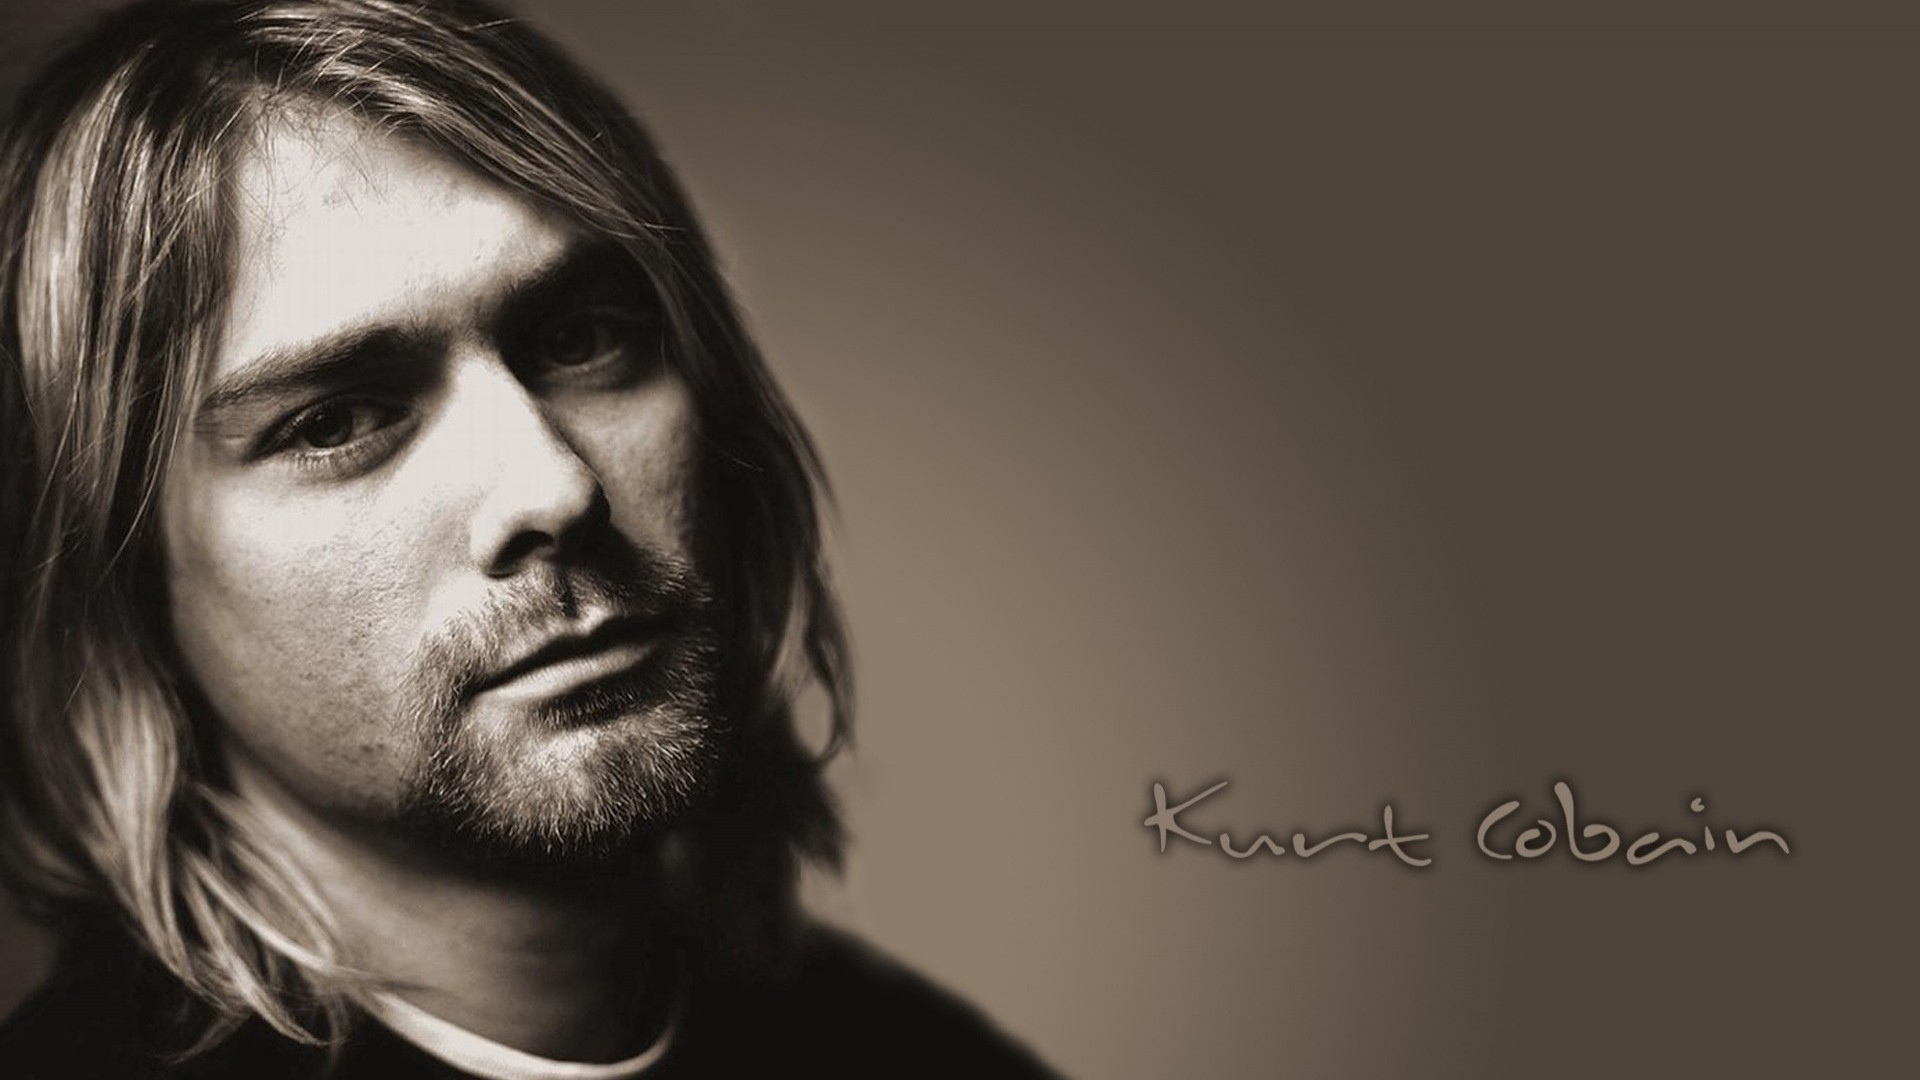 People 1920x1080 Kurt Cobain Nirvana sepia men looking at viewer long hair celebrity simple background music singer musician